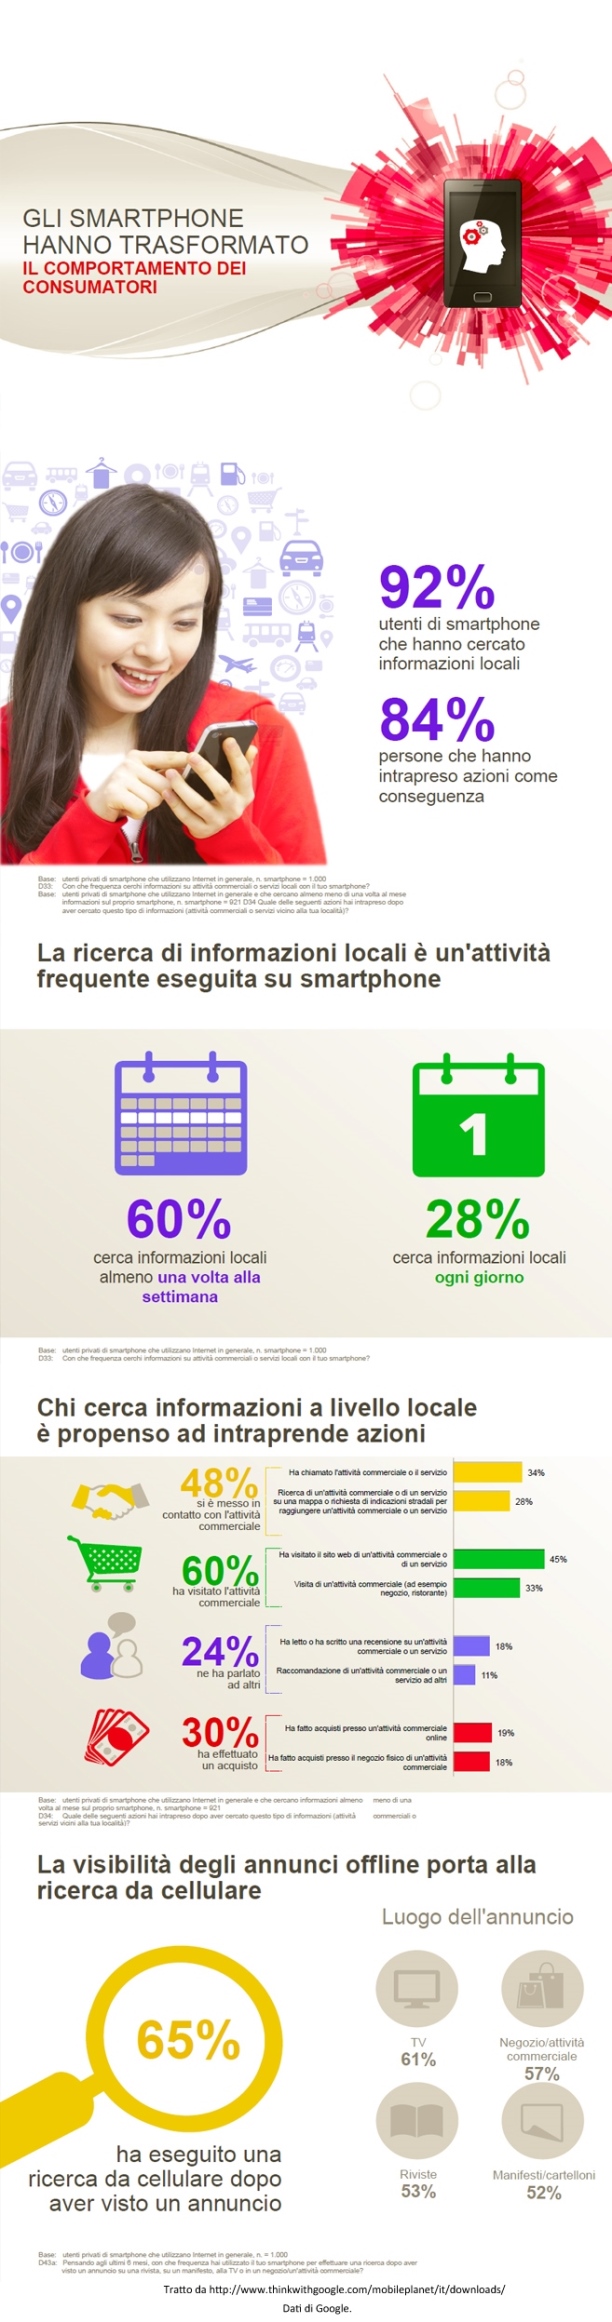 infografica smartphone 2